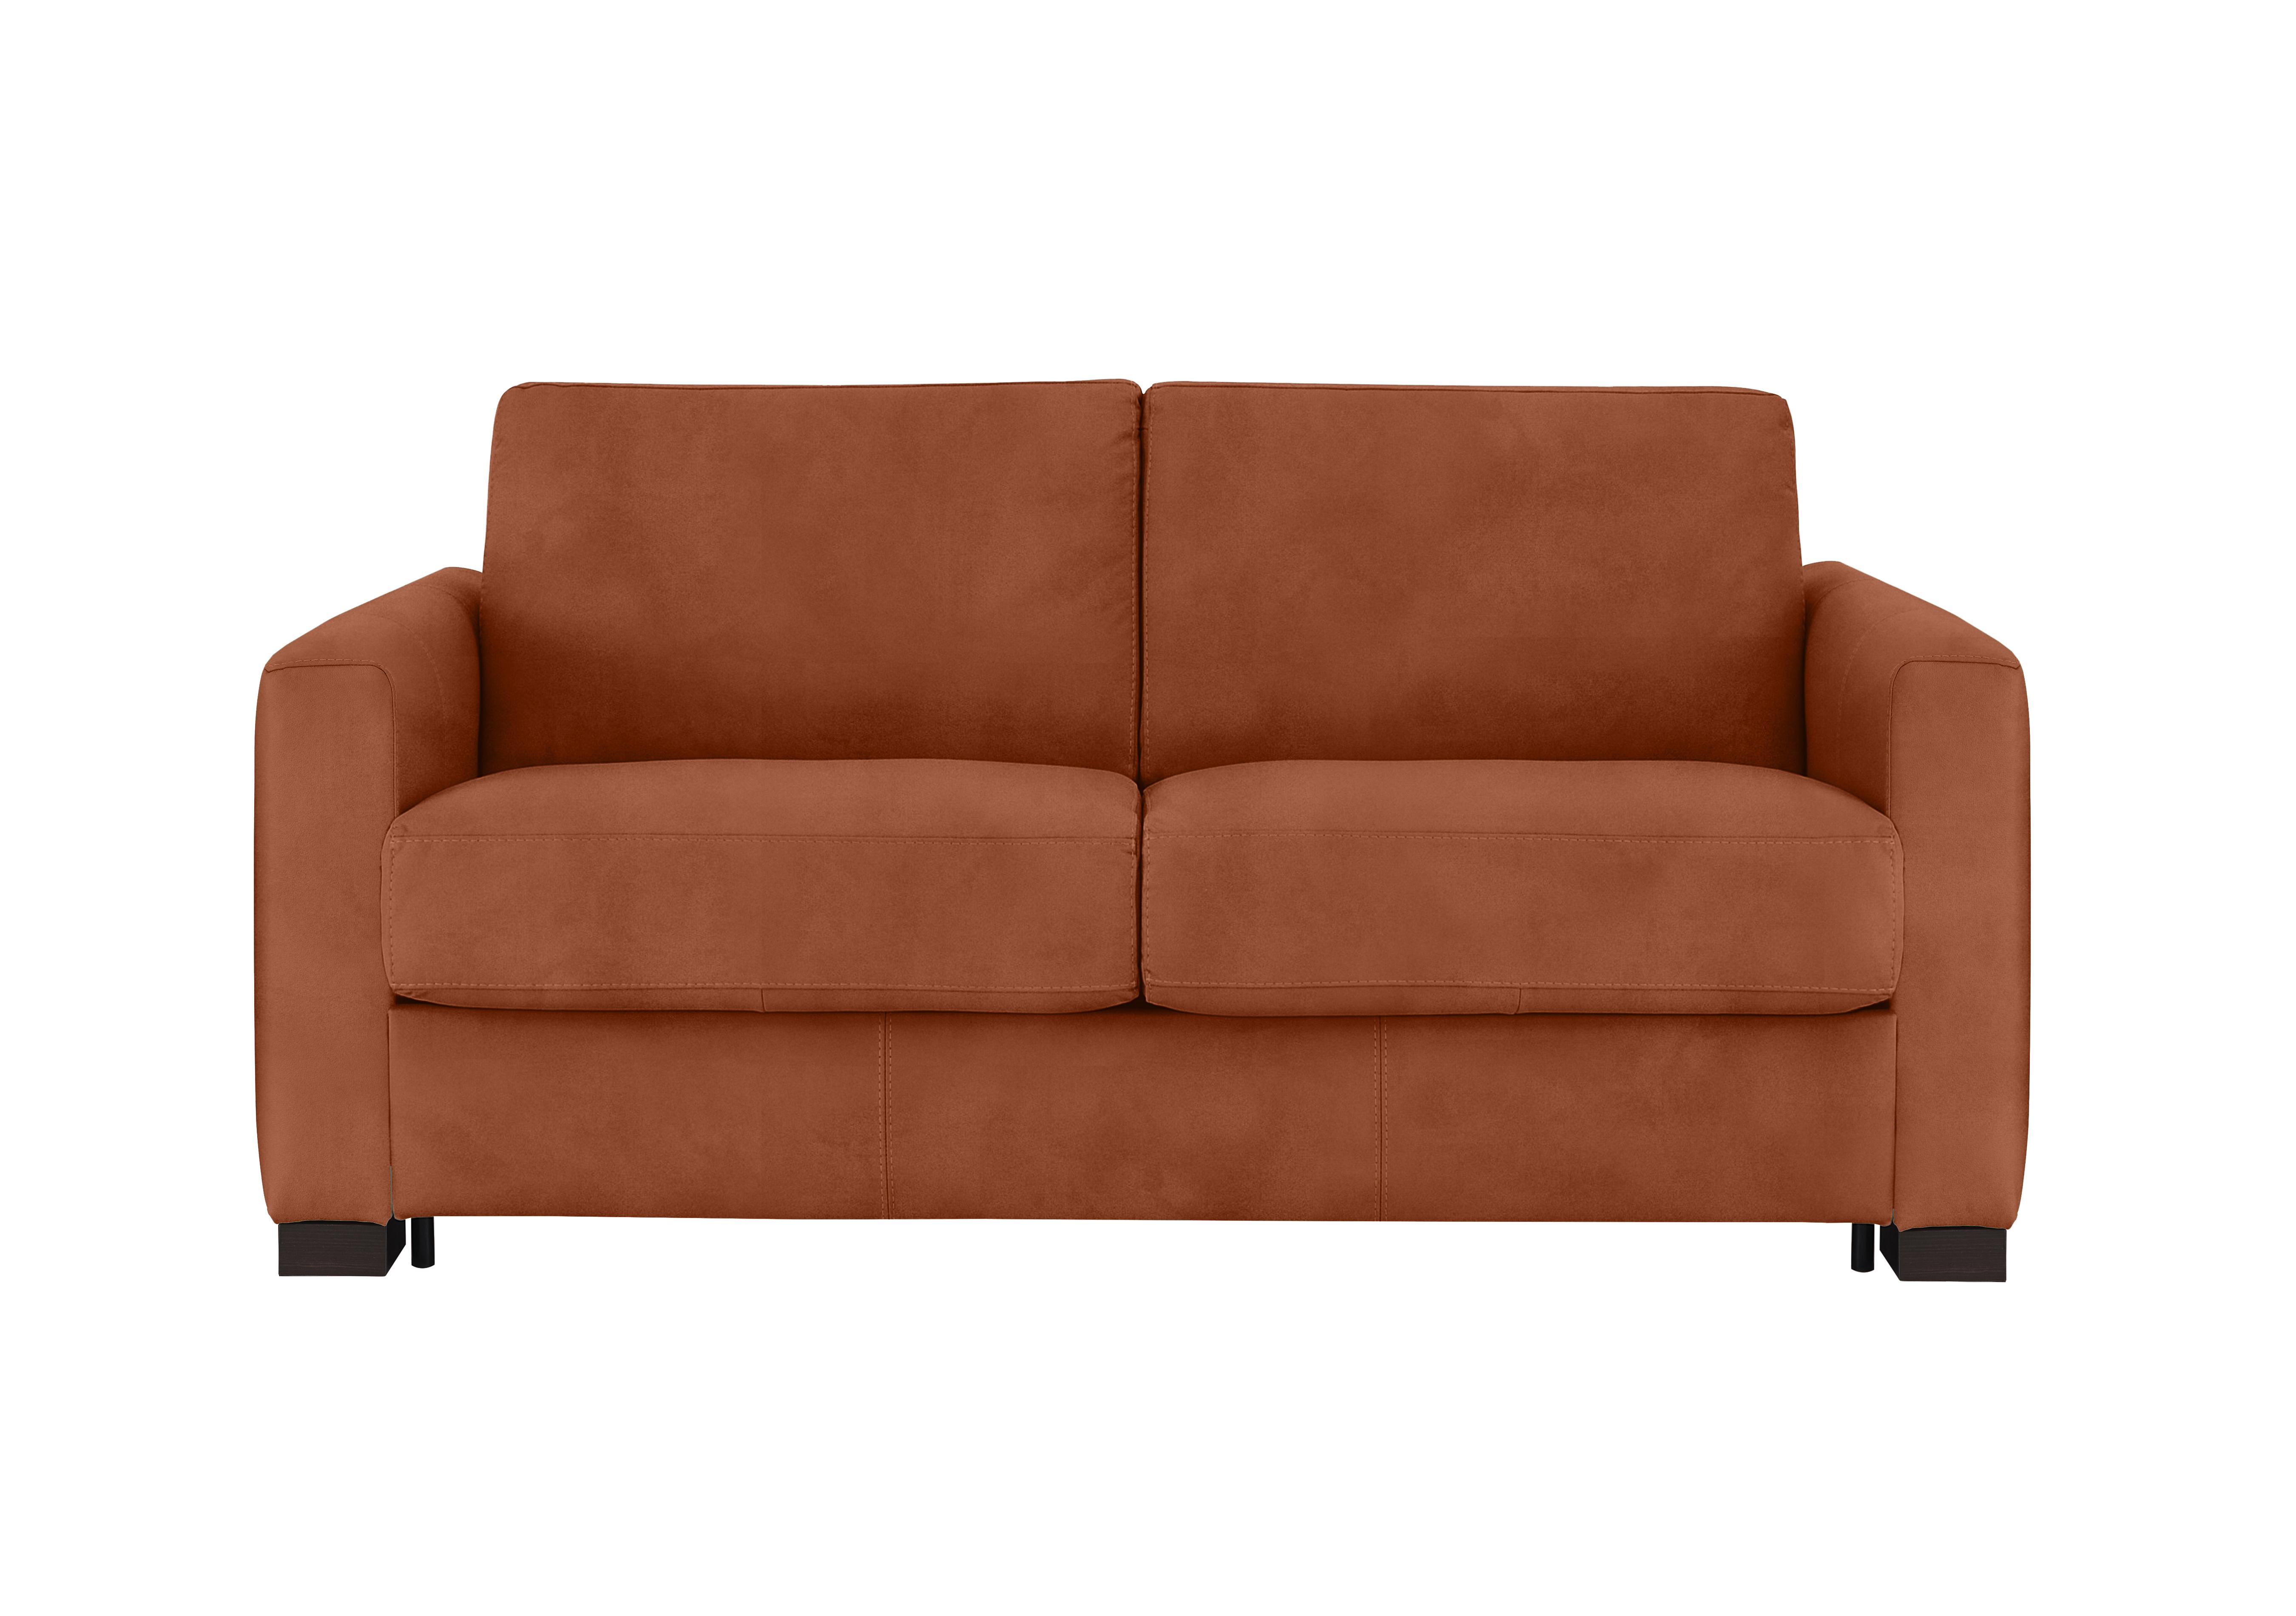 Alcova 2 Seater Fabric Sofa Bed with Box Arms in Selma Mattone on Furniture Village